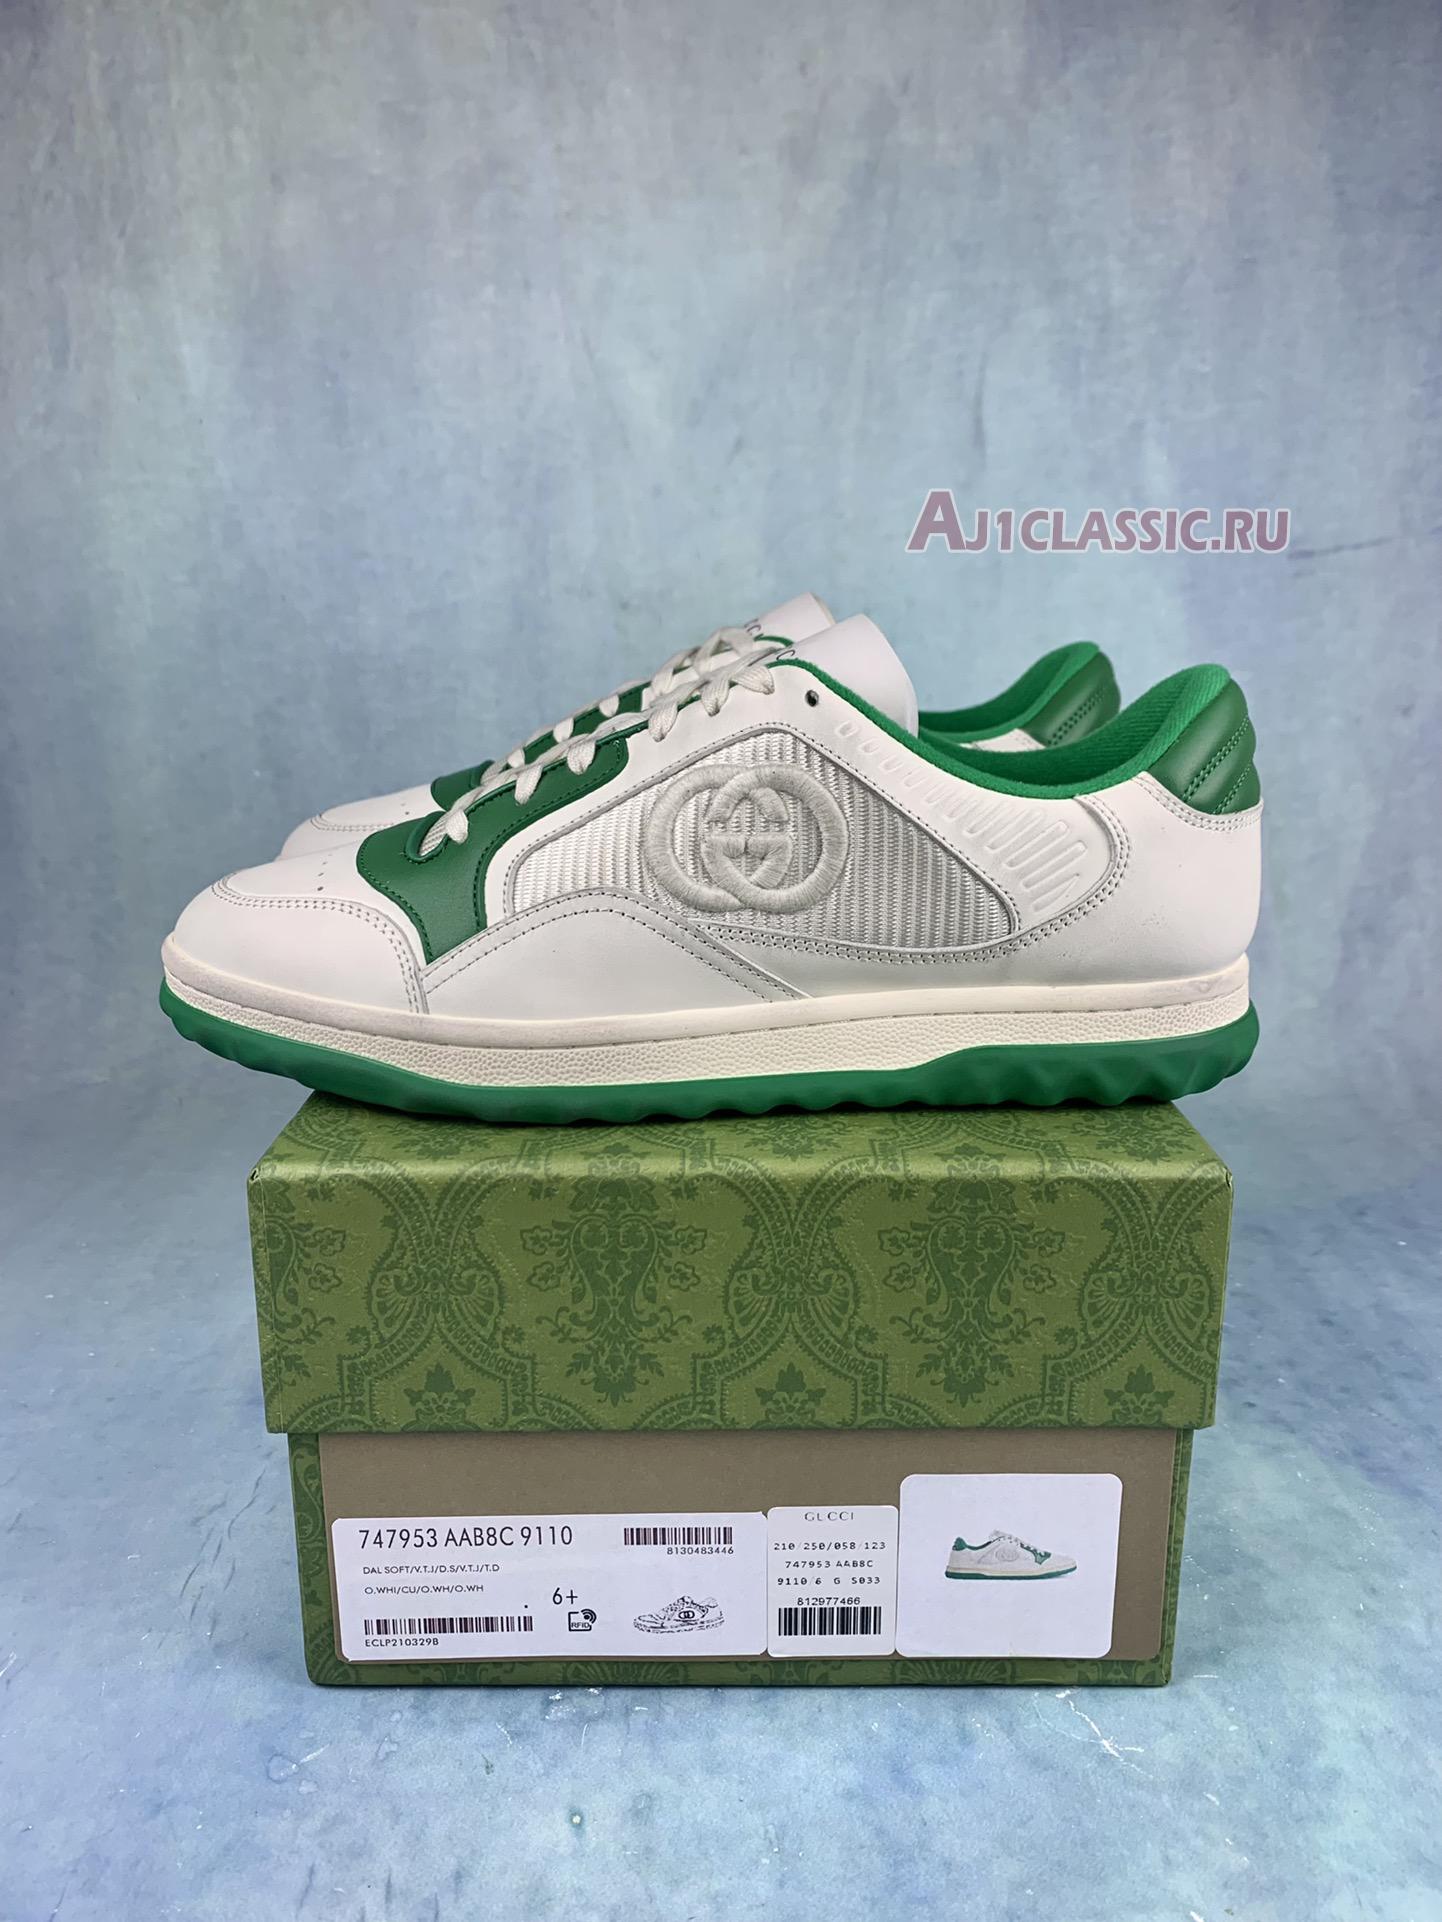 Gucci MAC80 Sneaker "Off White Green" 749896 AAB79 9148